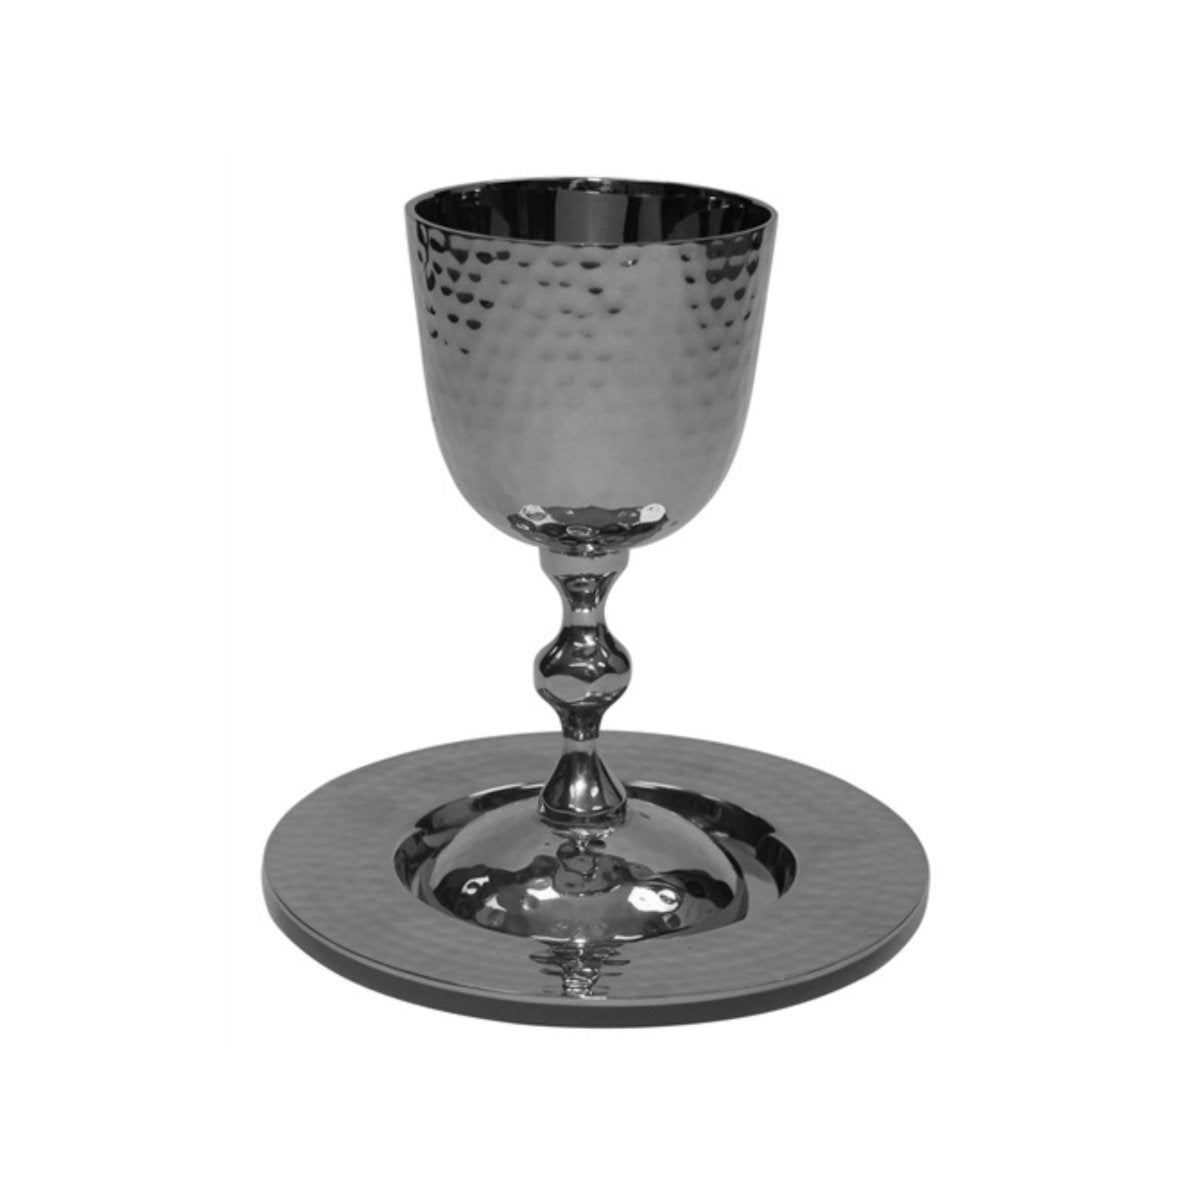 KIddush Cup-Silver - Ofek's Judaica -